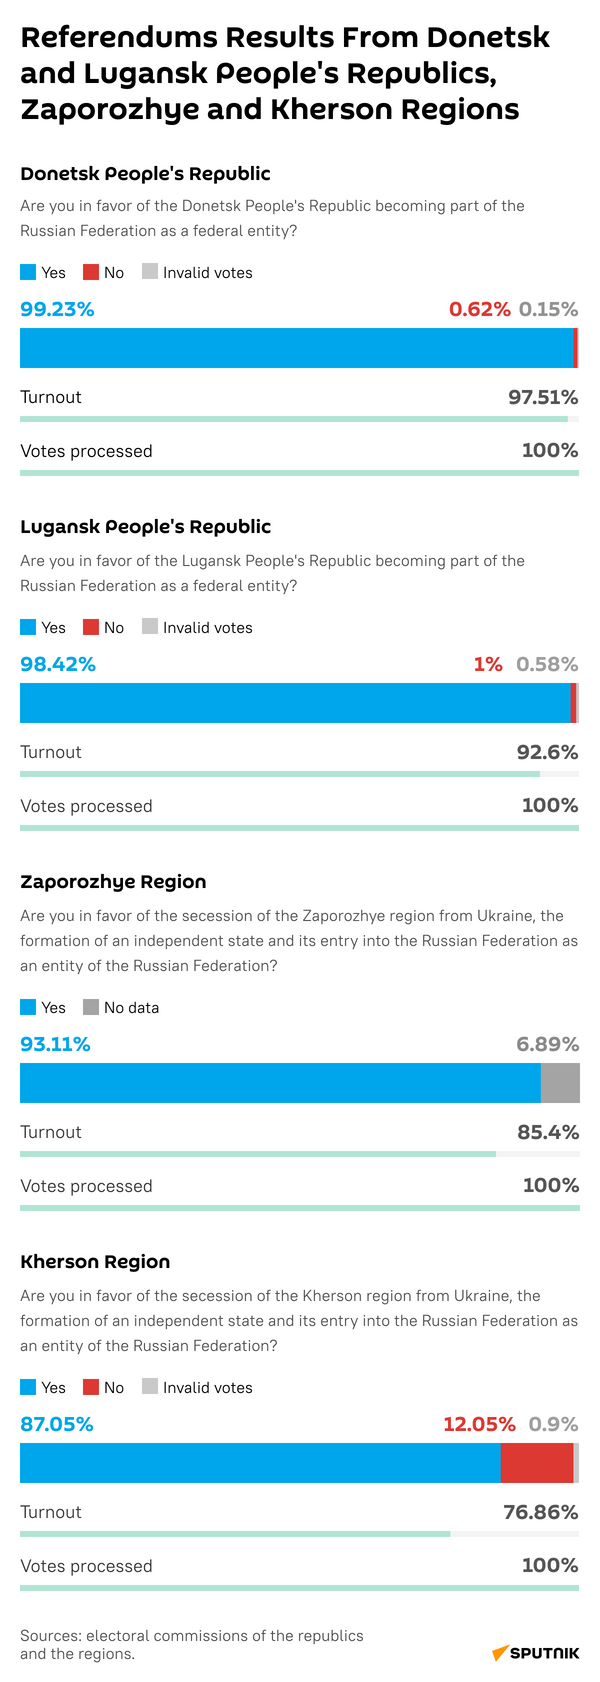 Referendum Results From Donetsk and Lugansk People's Republics, Zaporozhye and Kherson Regions - Sputnik International